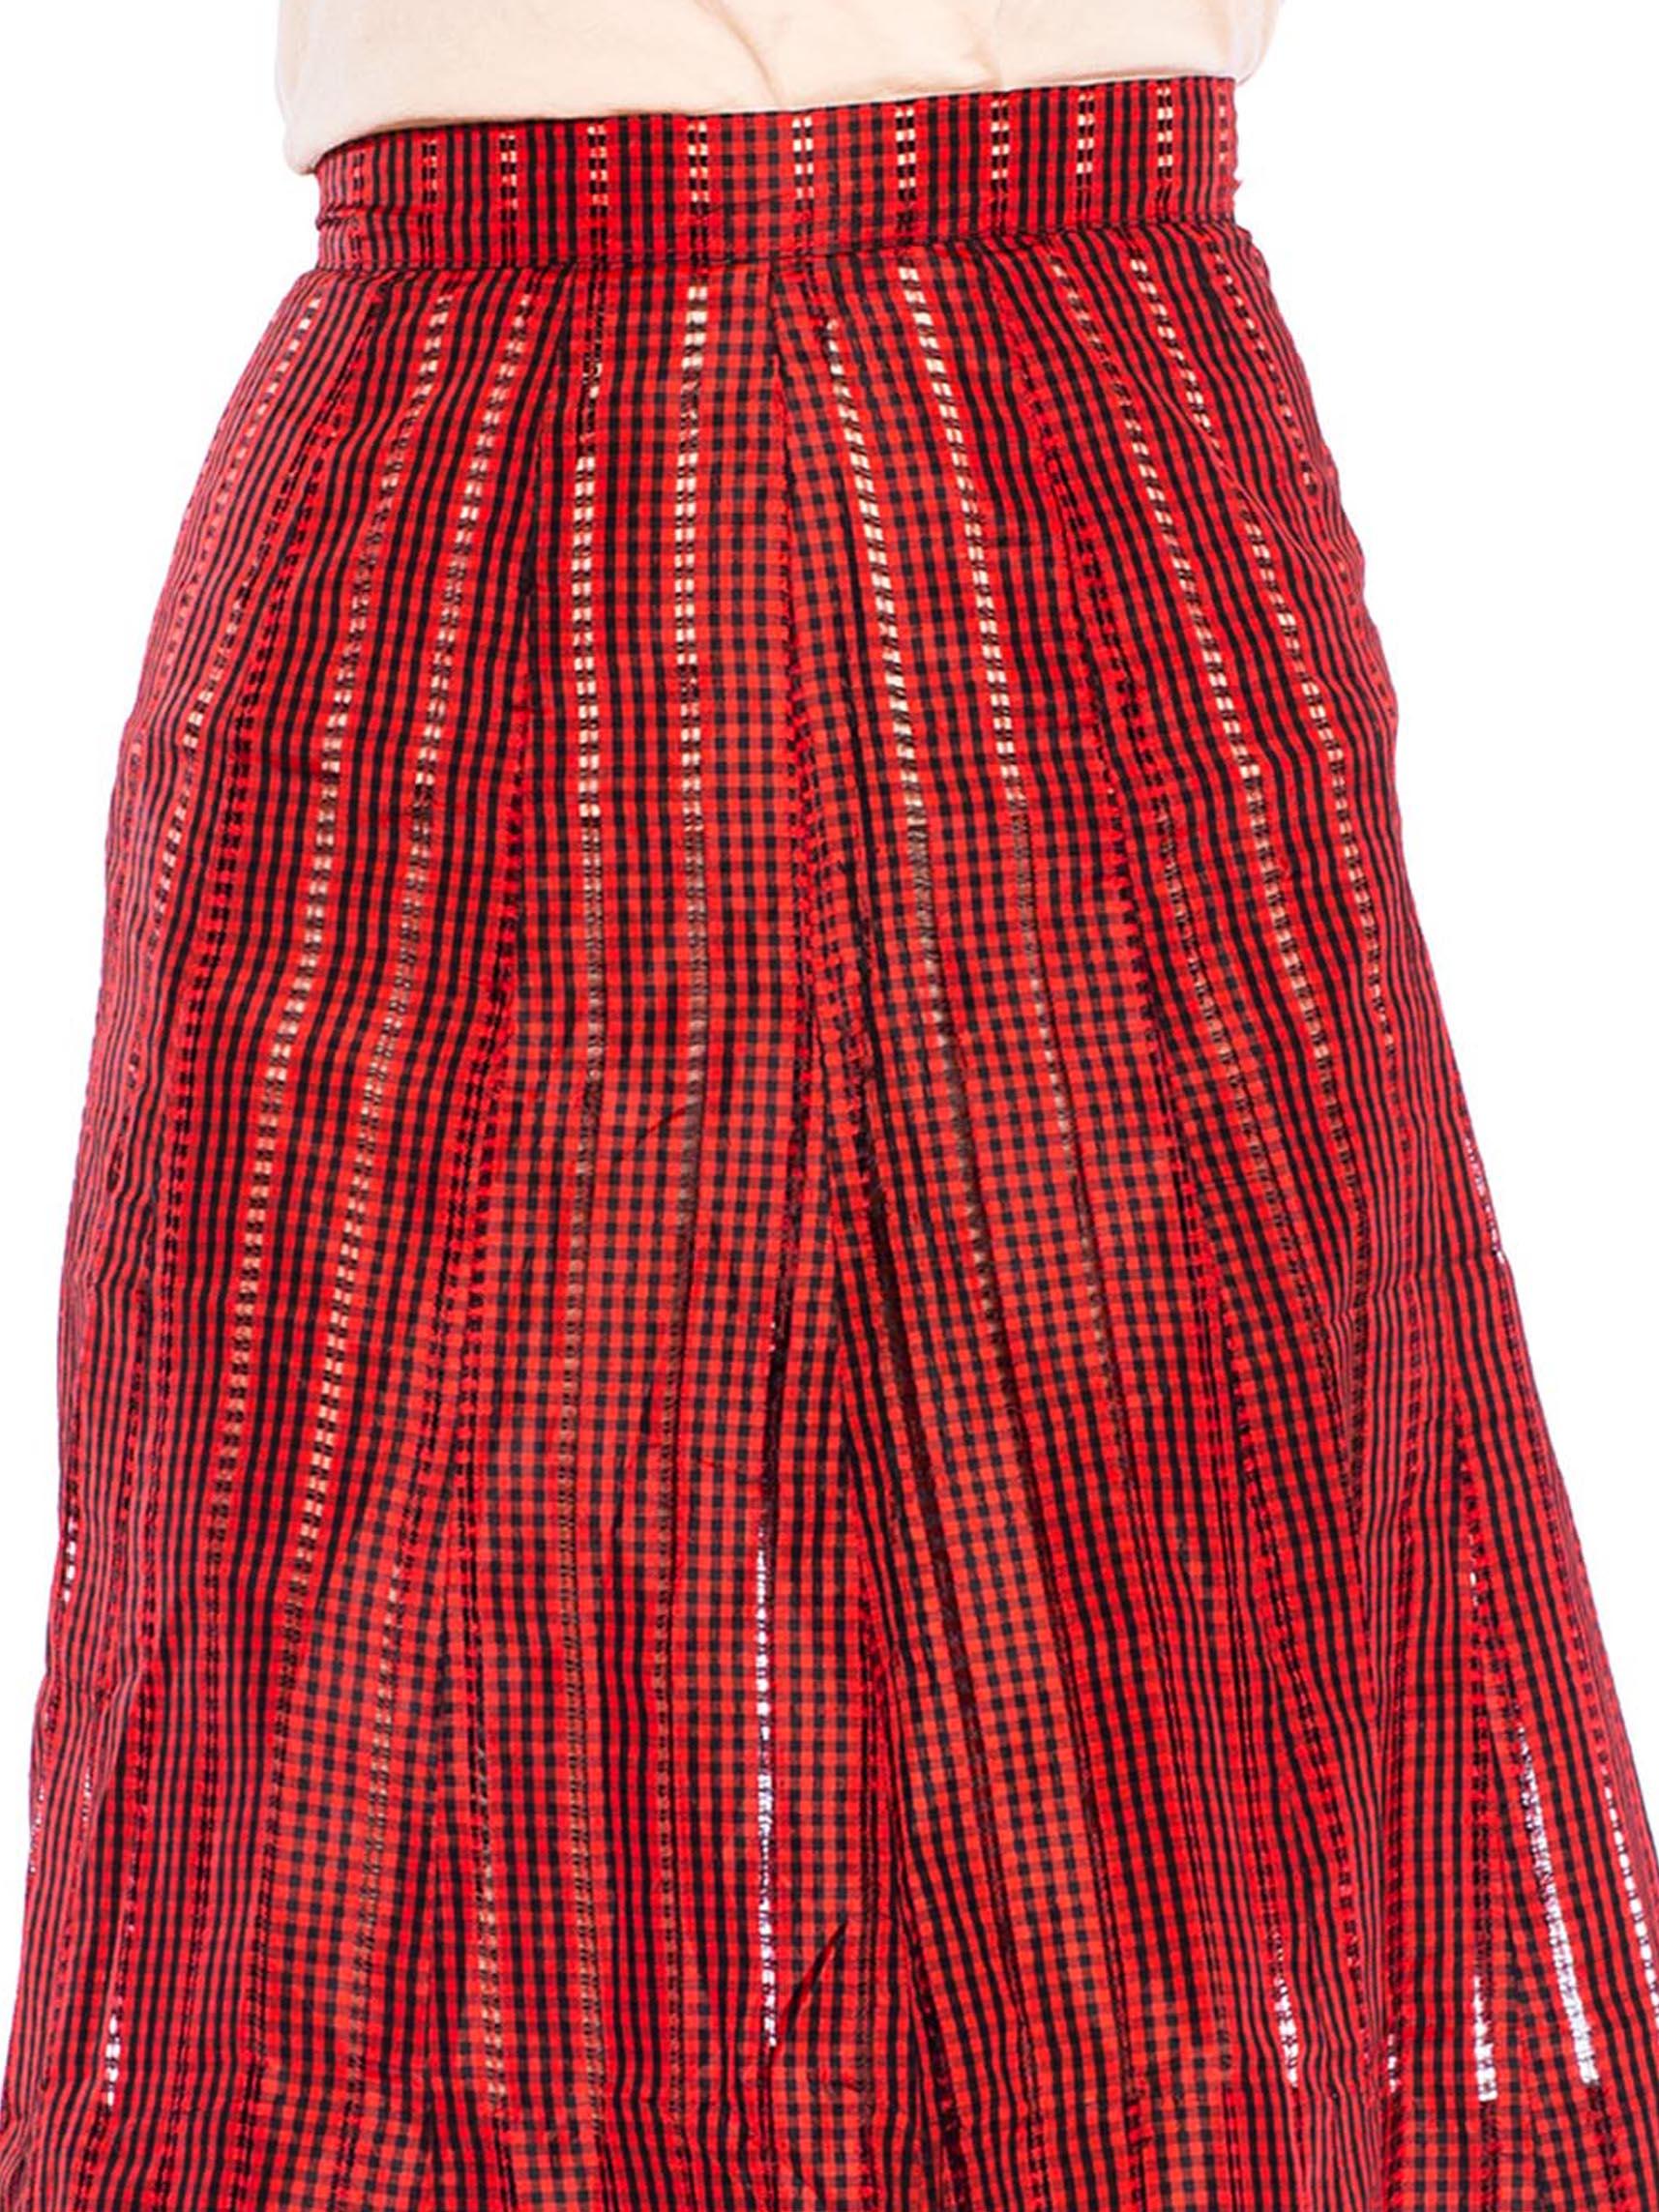 1950S Red & Black Silk Taffeta Checkered Skirt 6